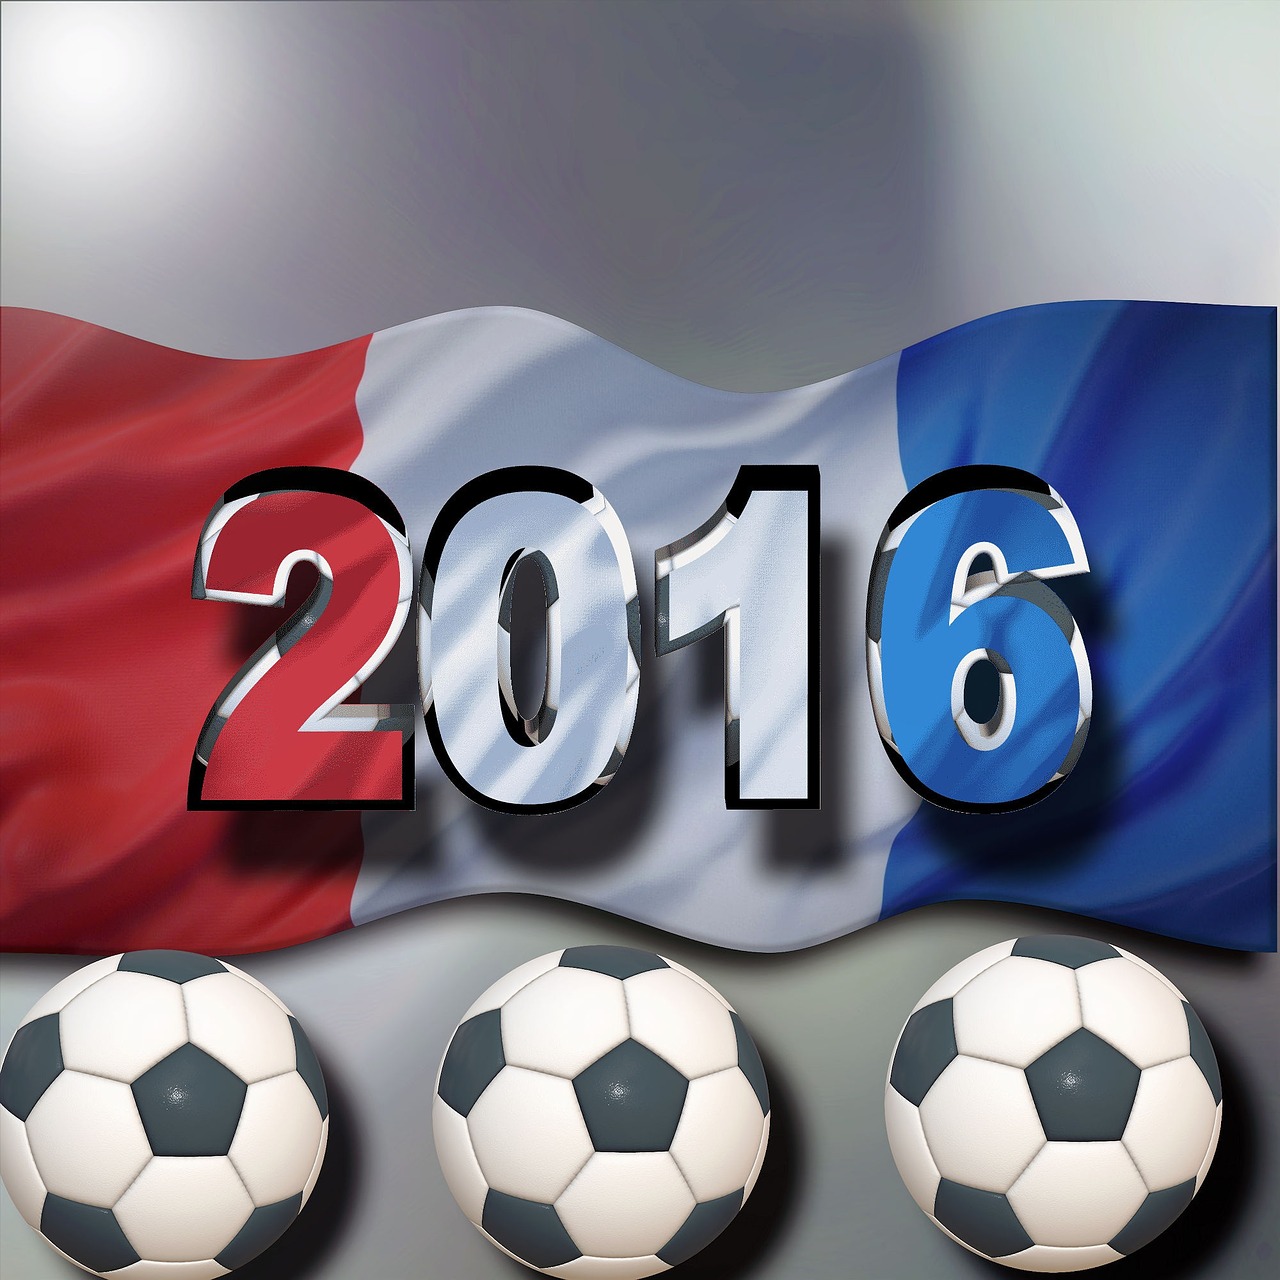 Europos Čempionatas, Futbolas, France, Rutulys, Apie, Raudona, Balta, Mėlynas, Futbolo Rungtynės, Em